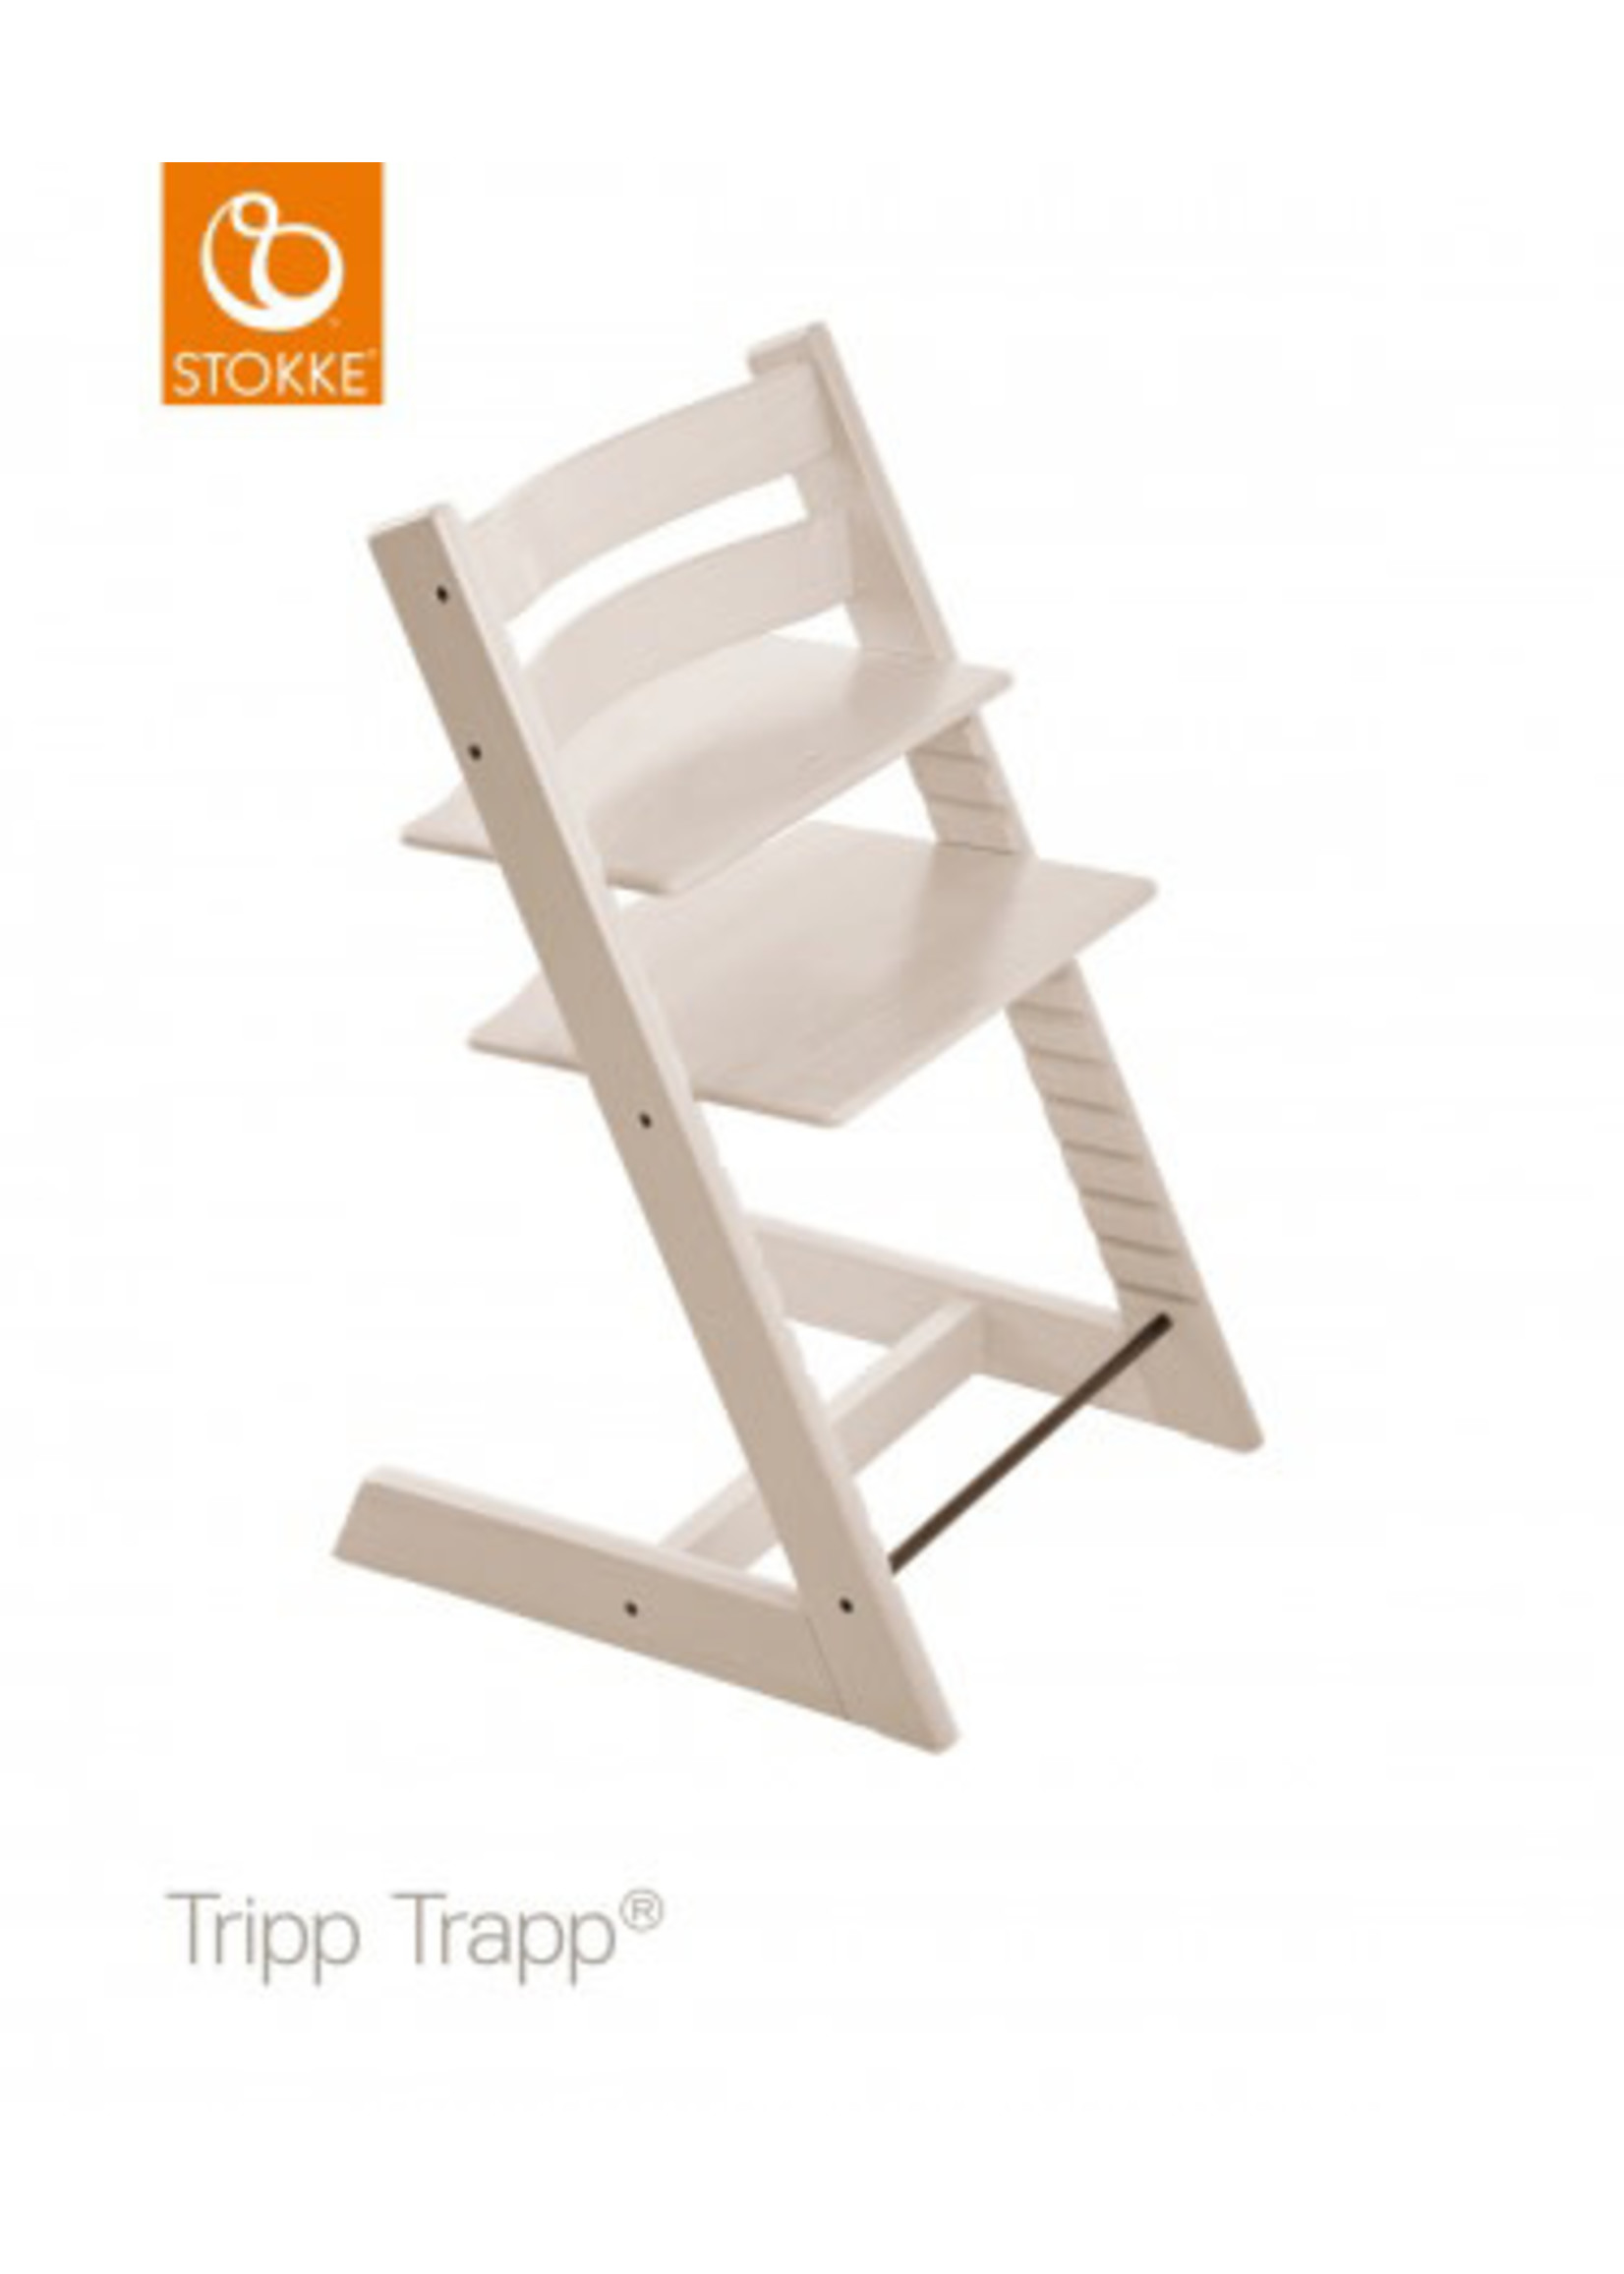 Stokke Stokke Tripp Trapp chair white wash